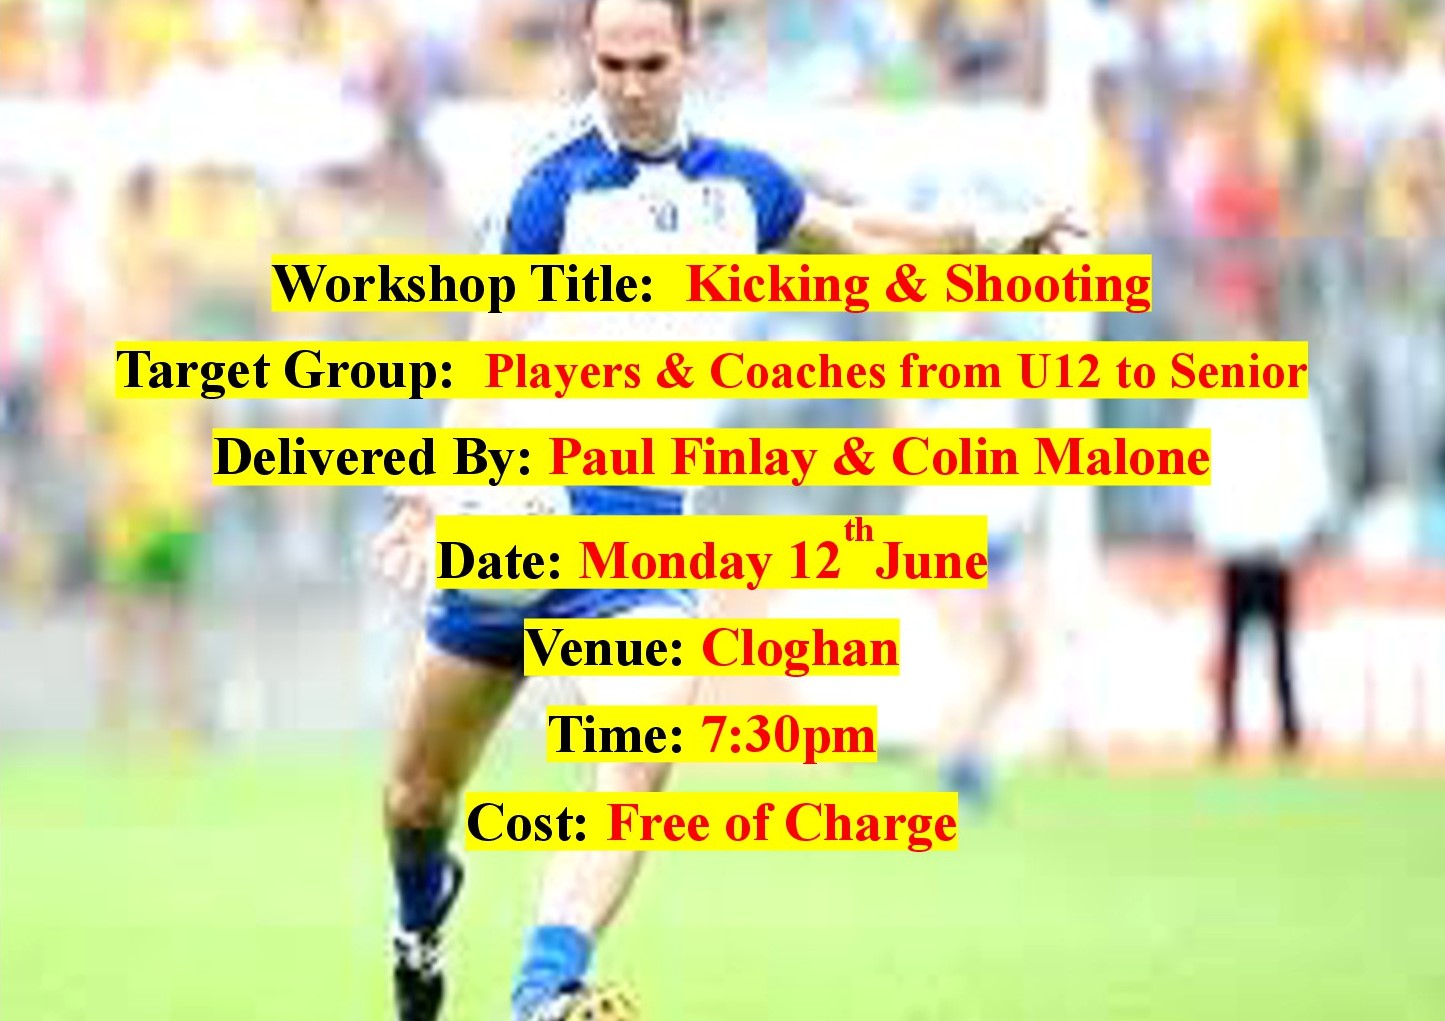 Kicking & Shooting Coaching Workshop- This Monday 12th June @7:30pm Cloghan